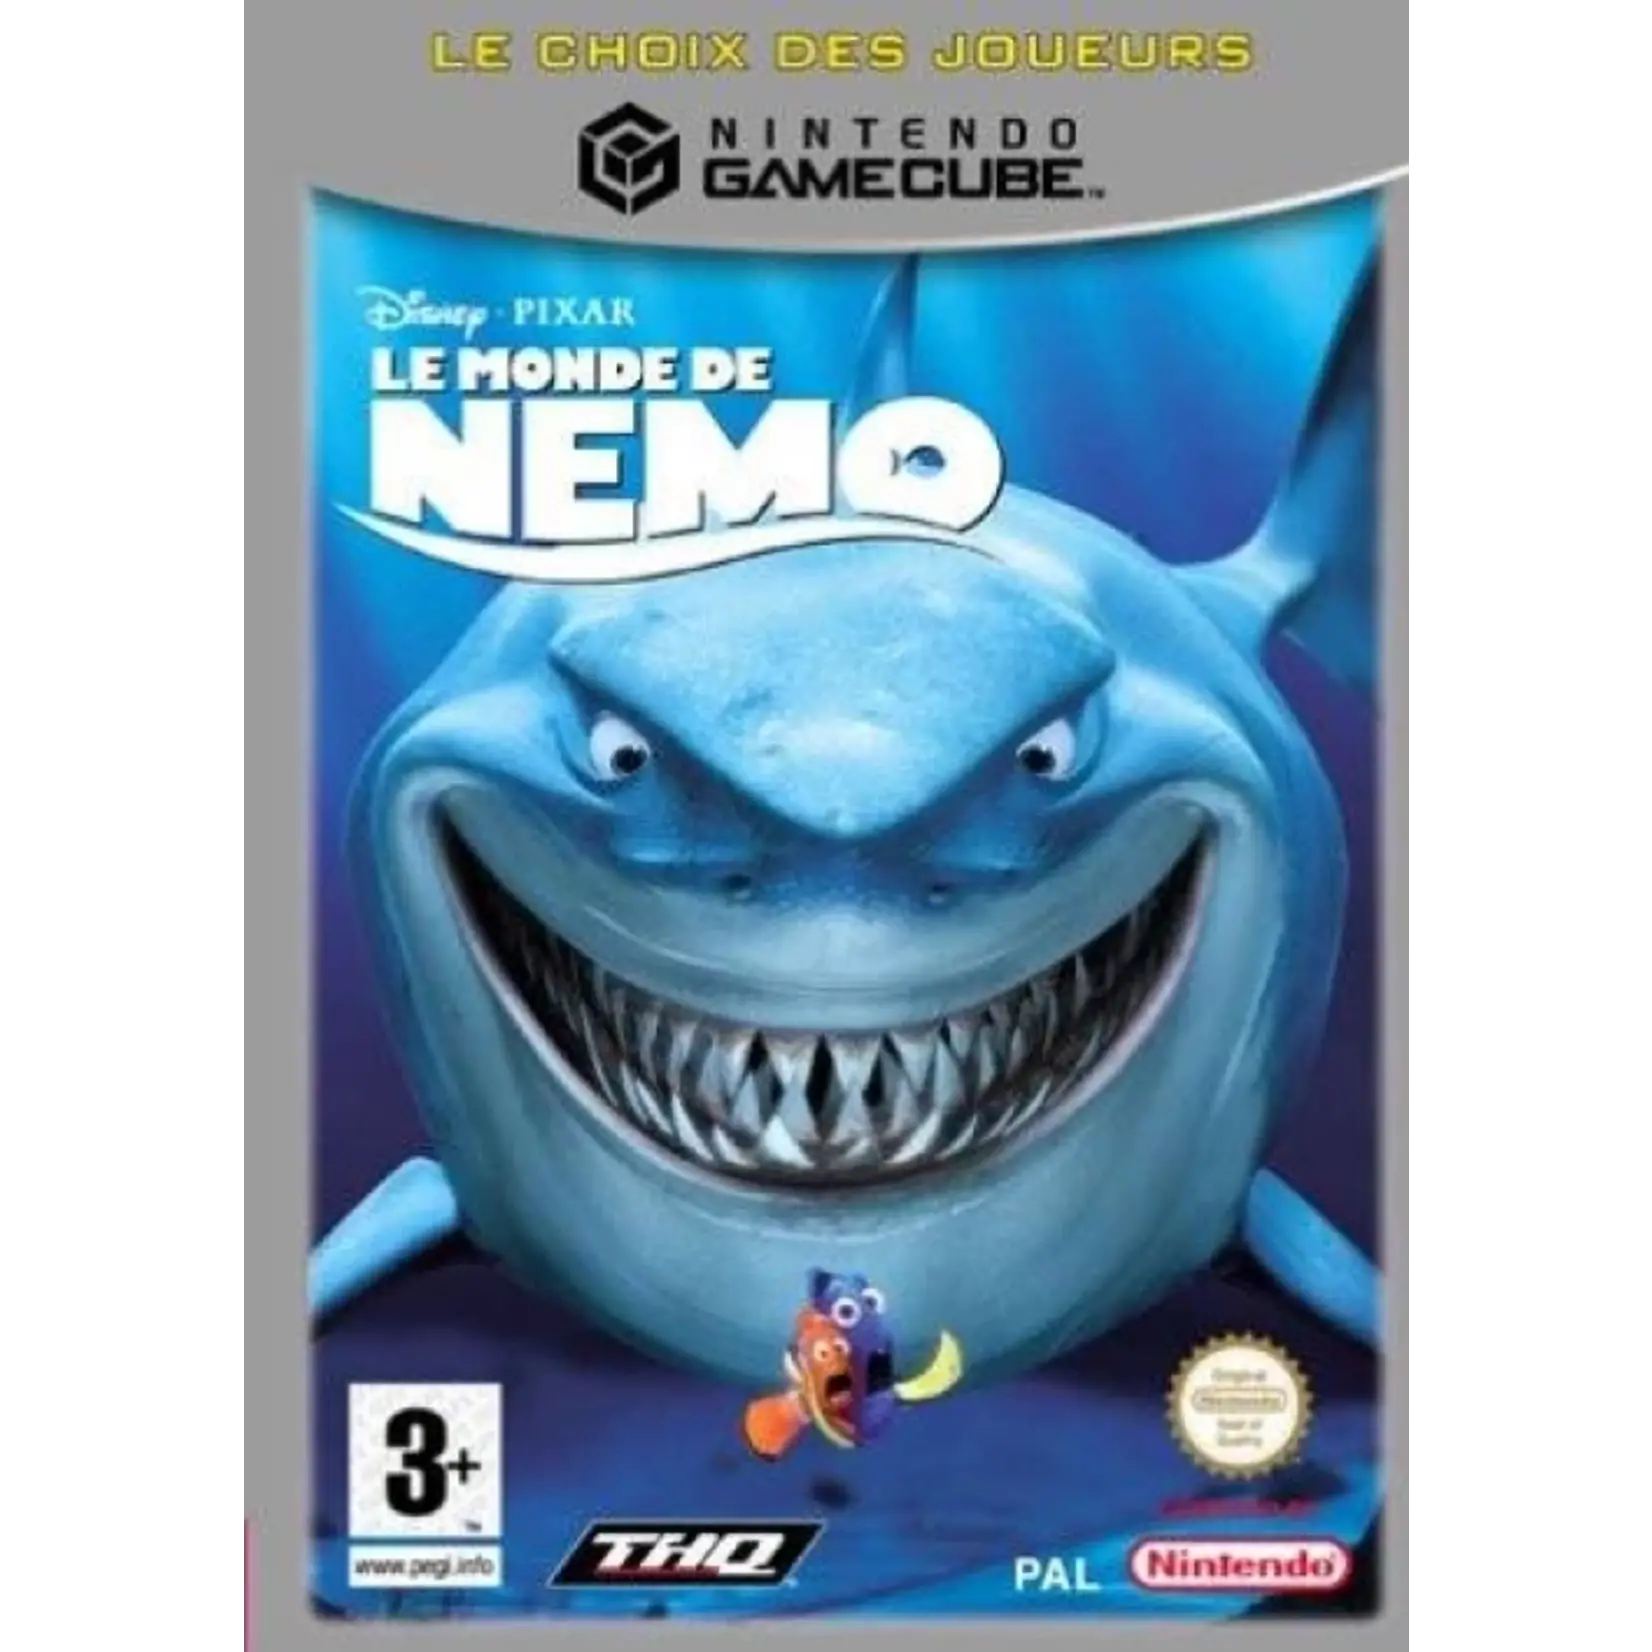 Finding Nemo NGC